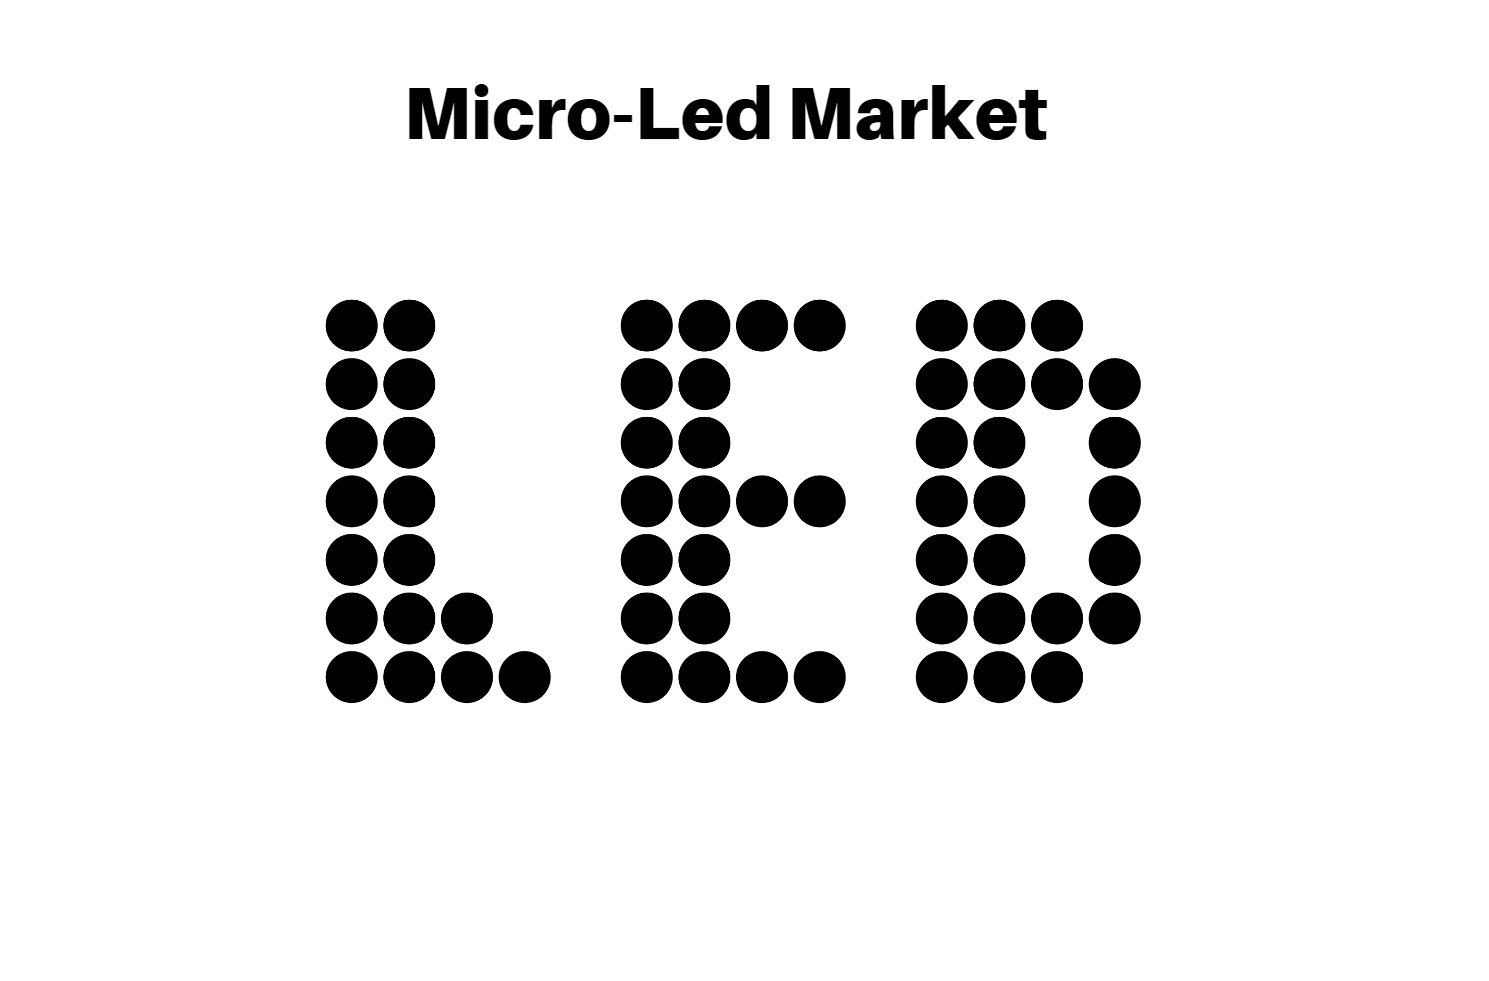 Micro-Led Market to Reach USD 359.6 billion by 2032